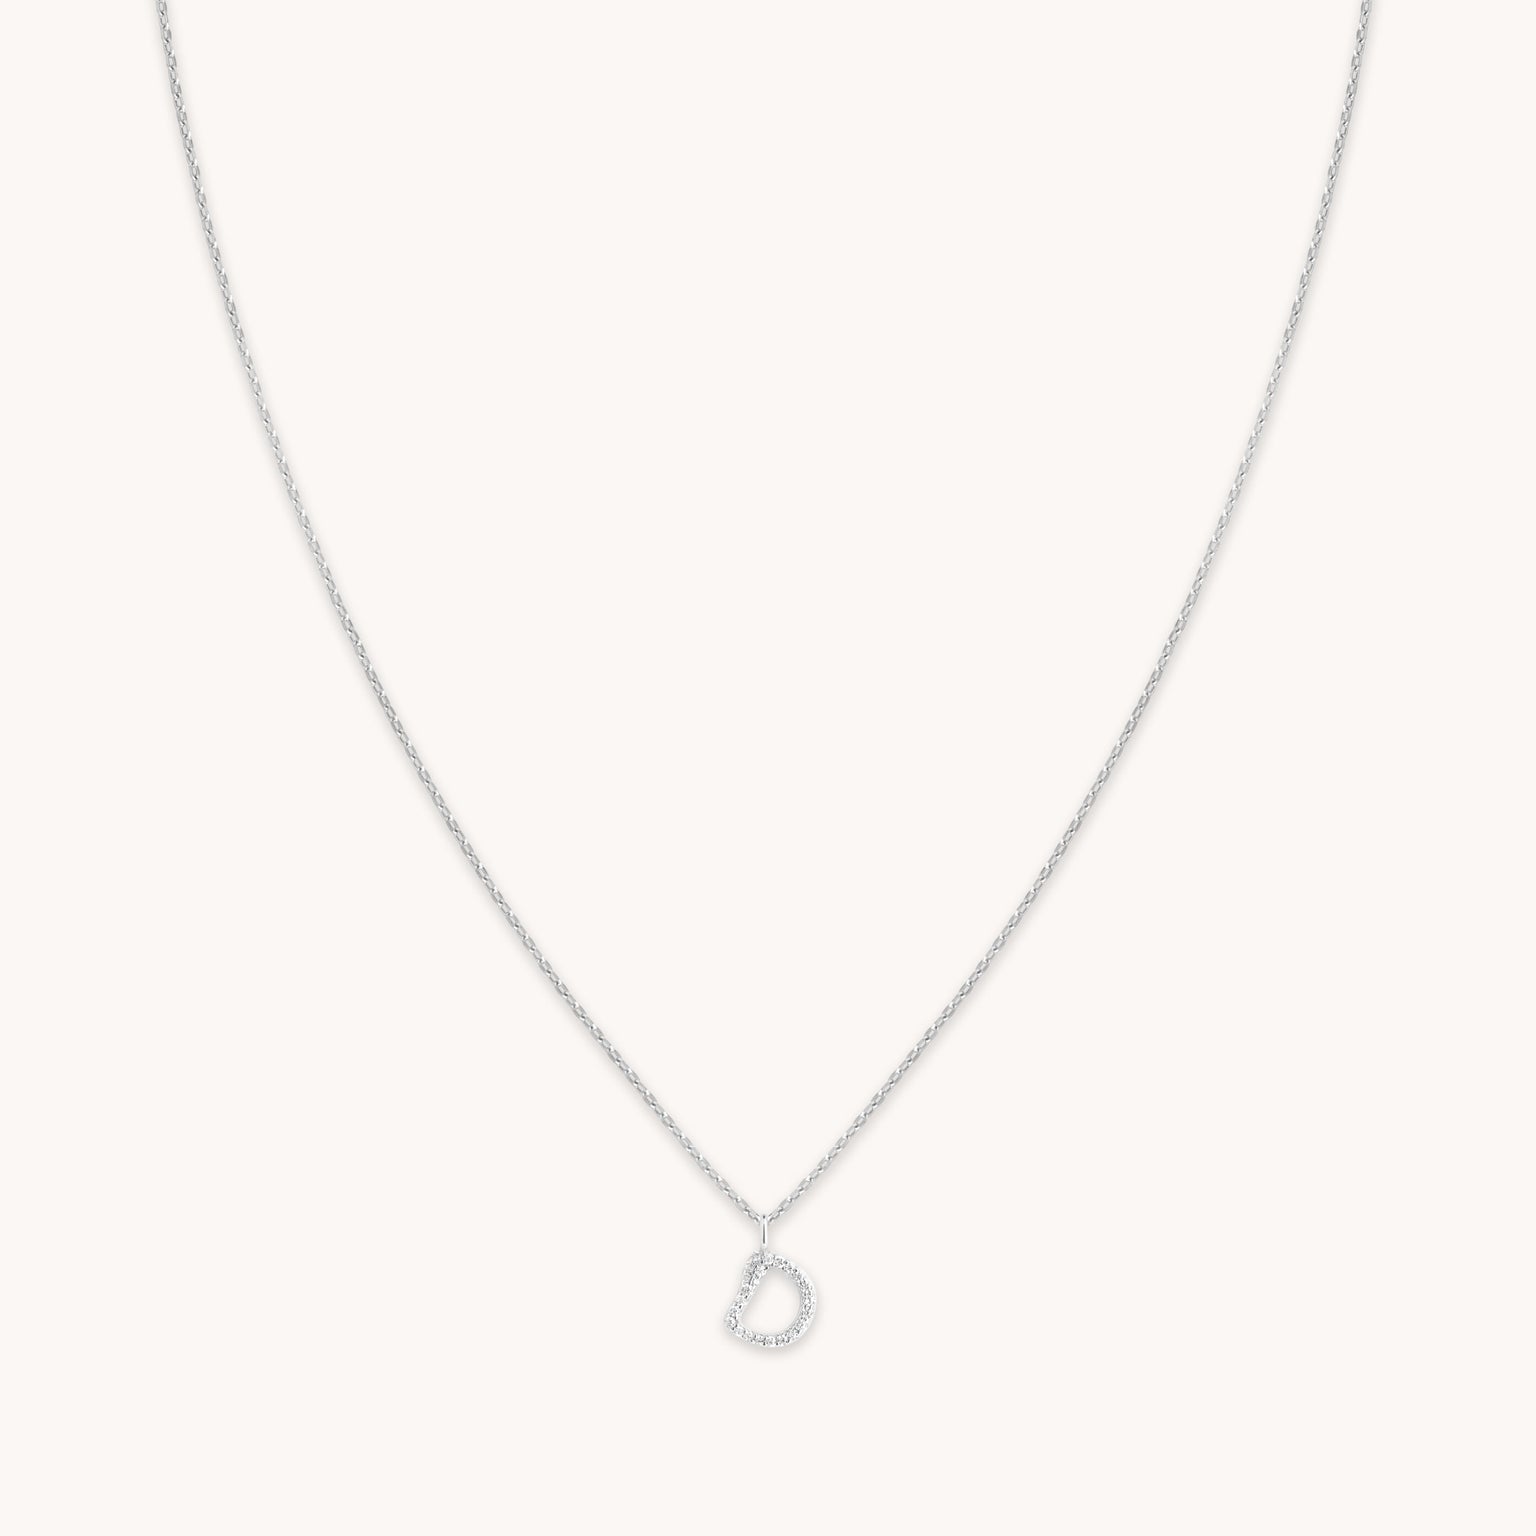 D Initial Pavé Pendant Necklace in Silver